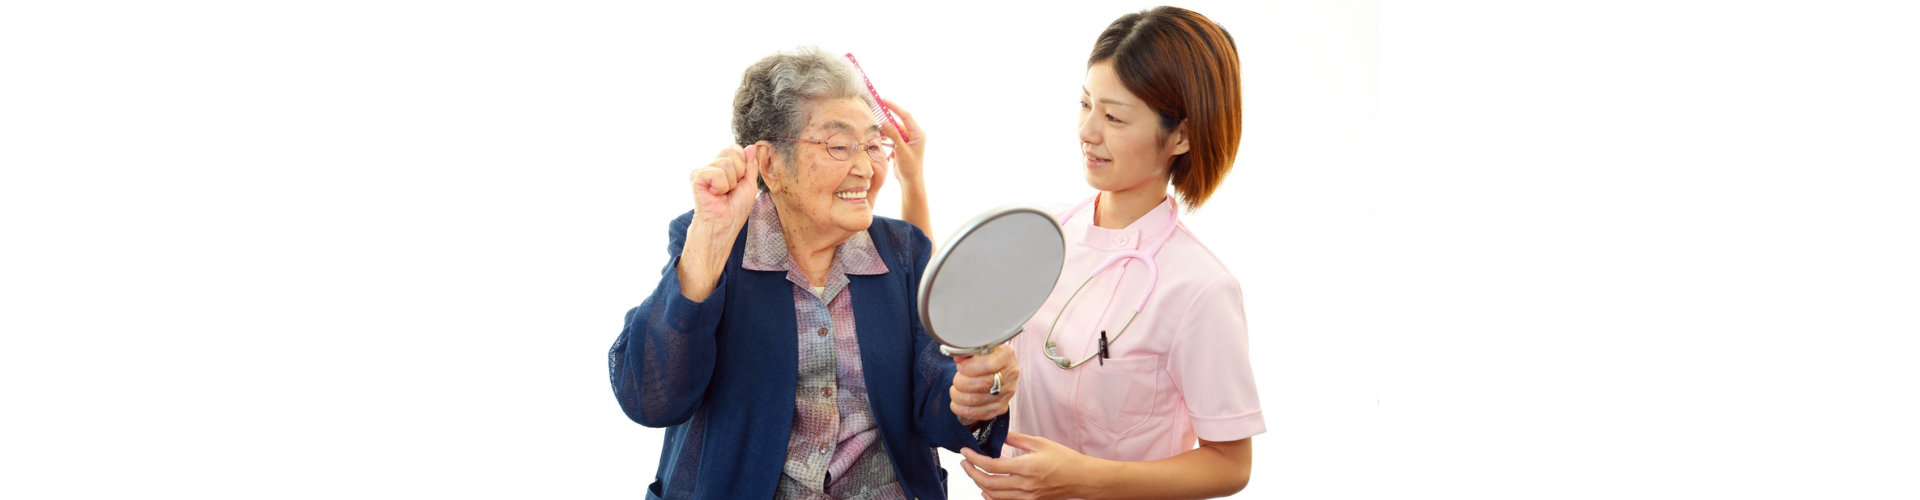 caregiver showing mirror to senior woman